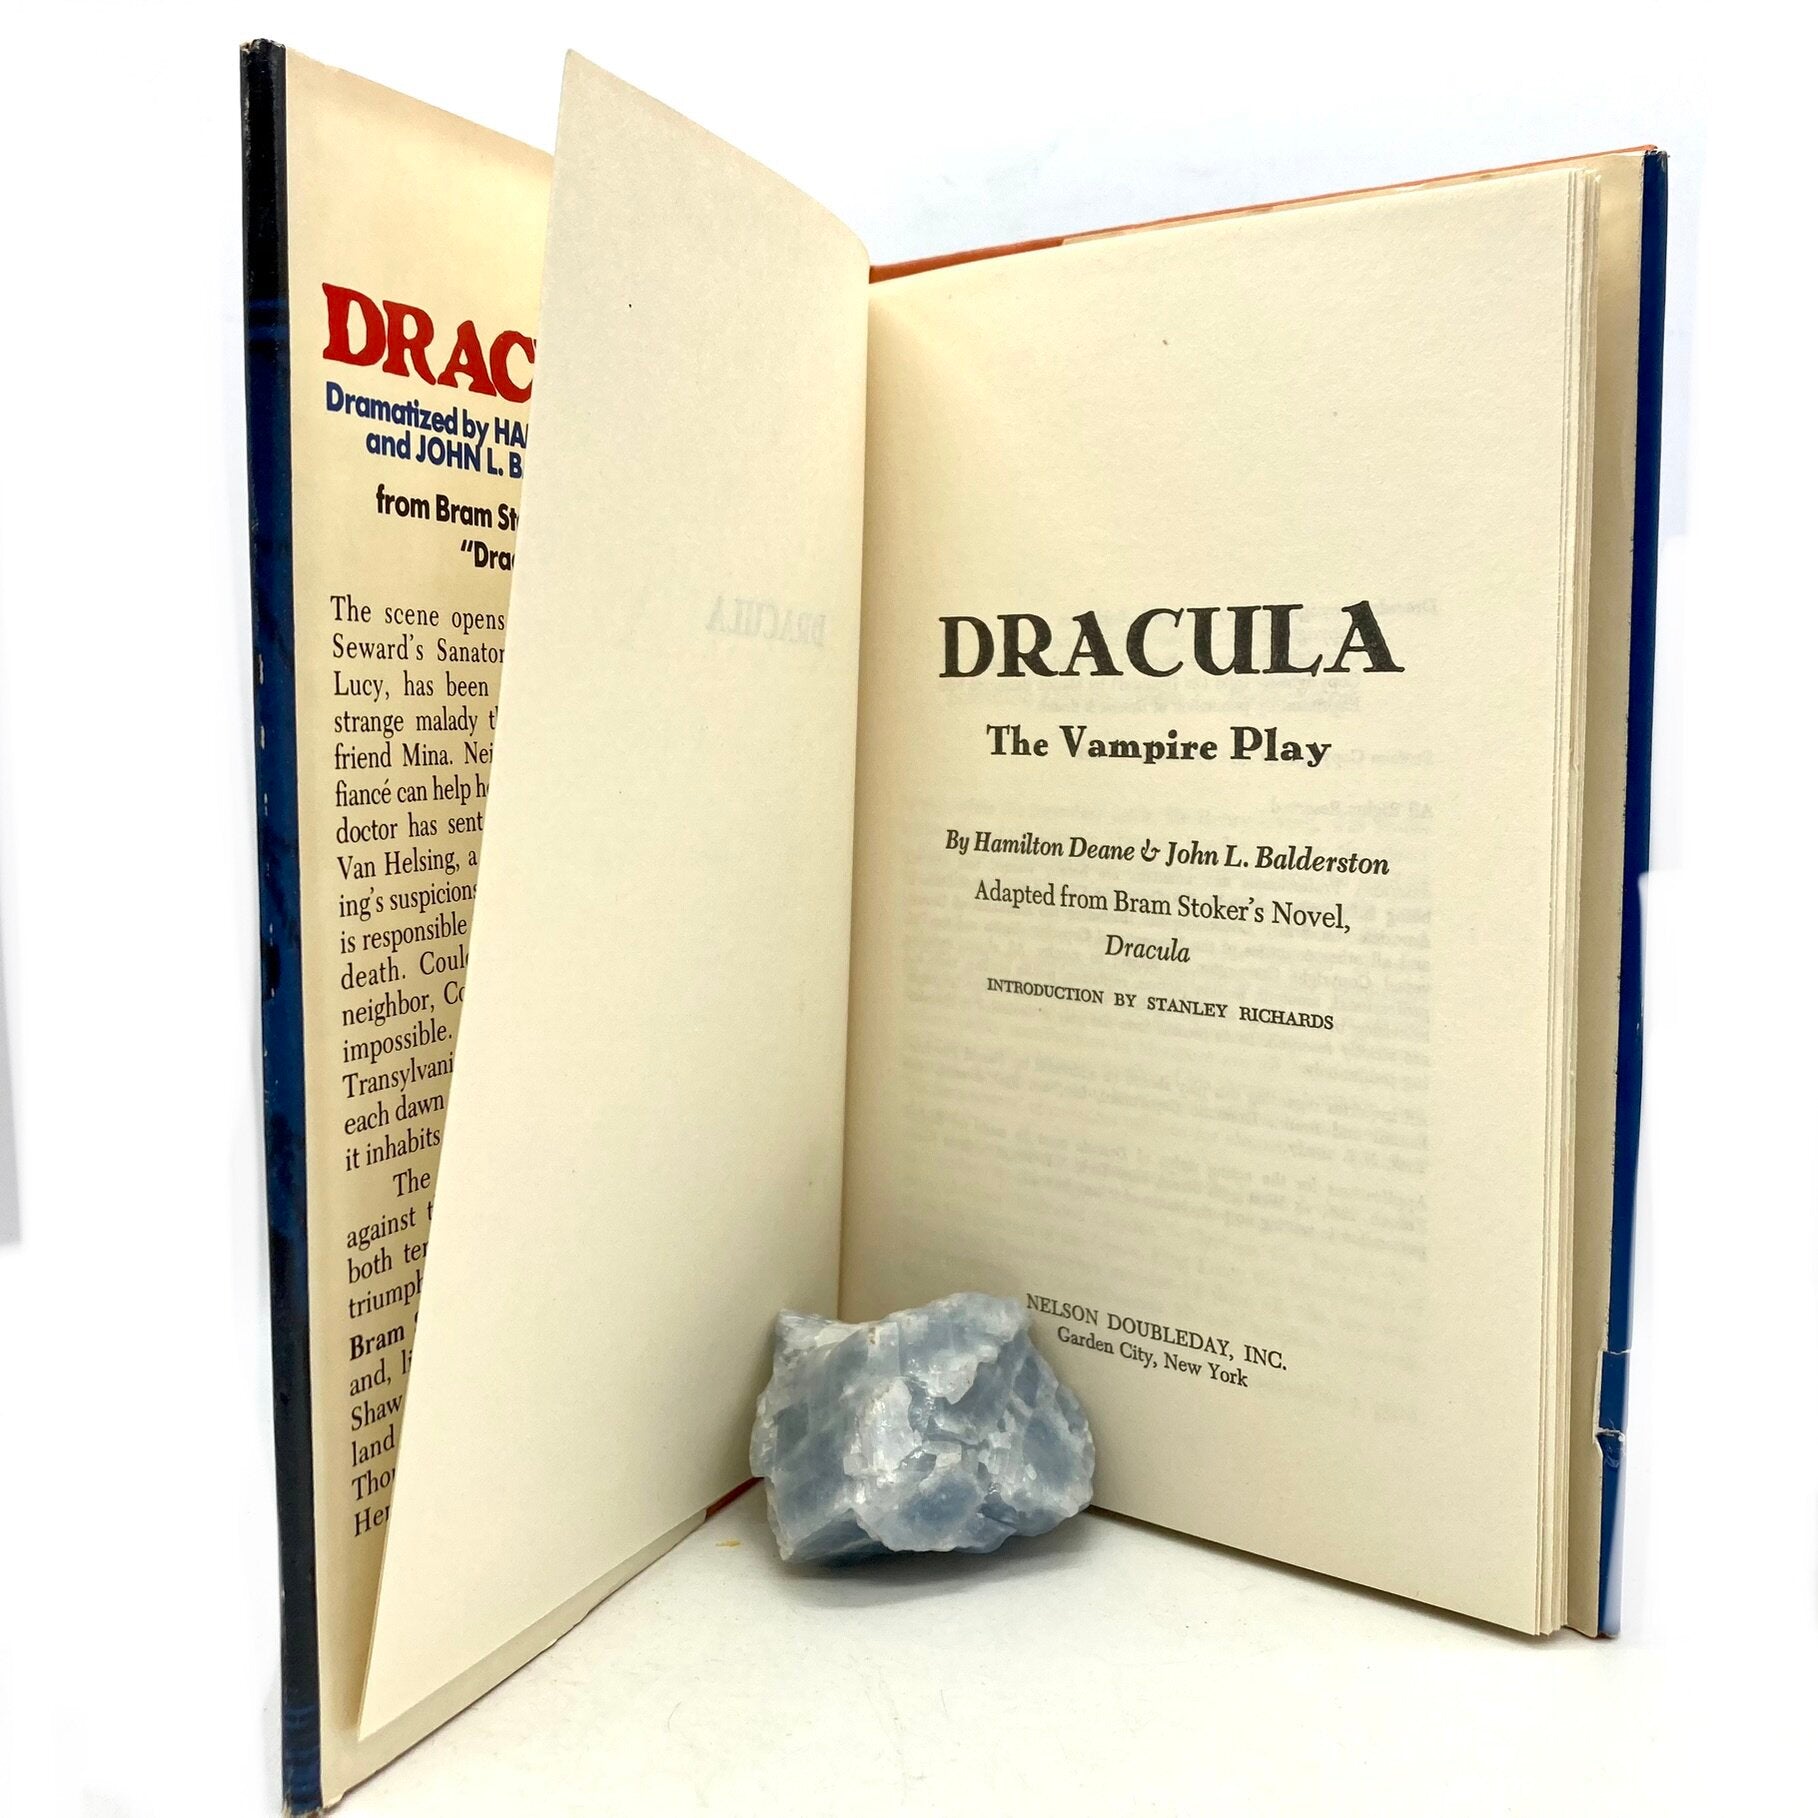 DEANE, Hamilton and BALDERSTON, John L. "Dracula: The Vampire Play" [Nelson Doubleday, 1971] - Buzz Bookstore